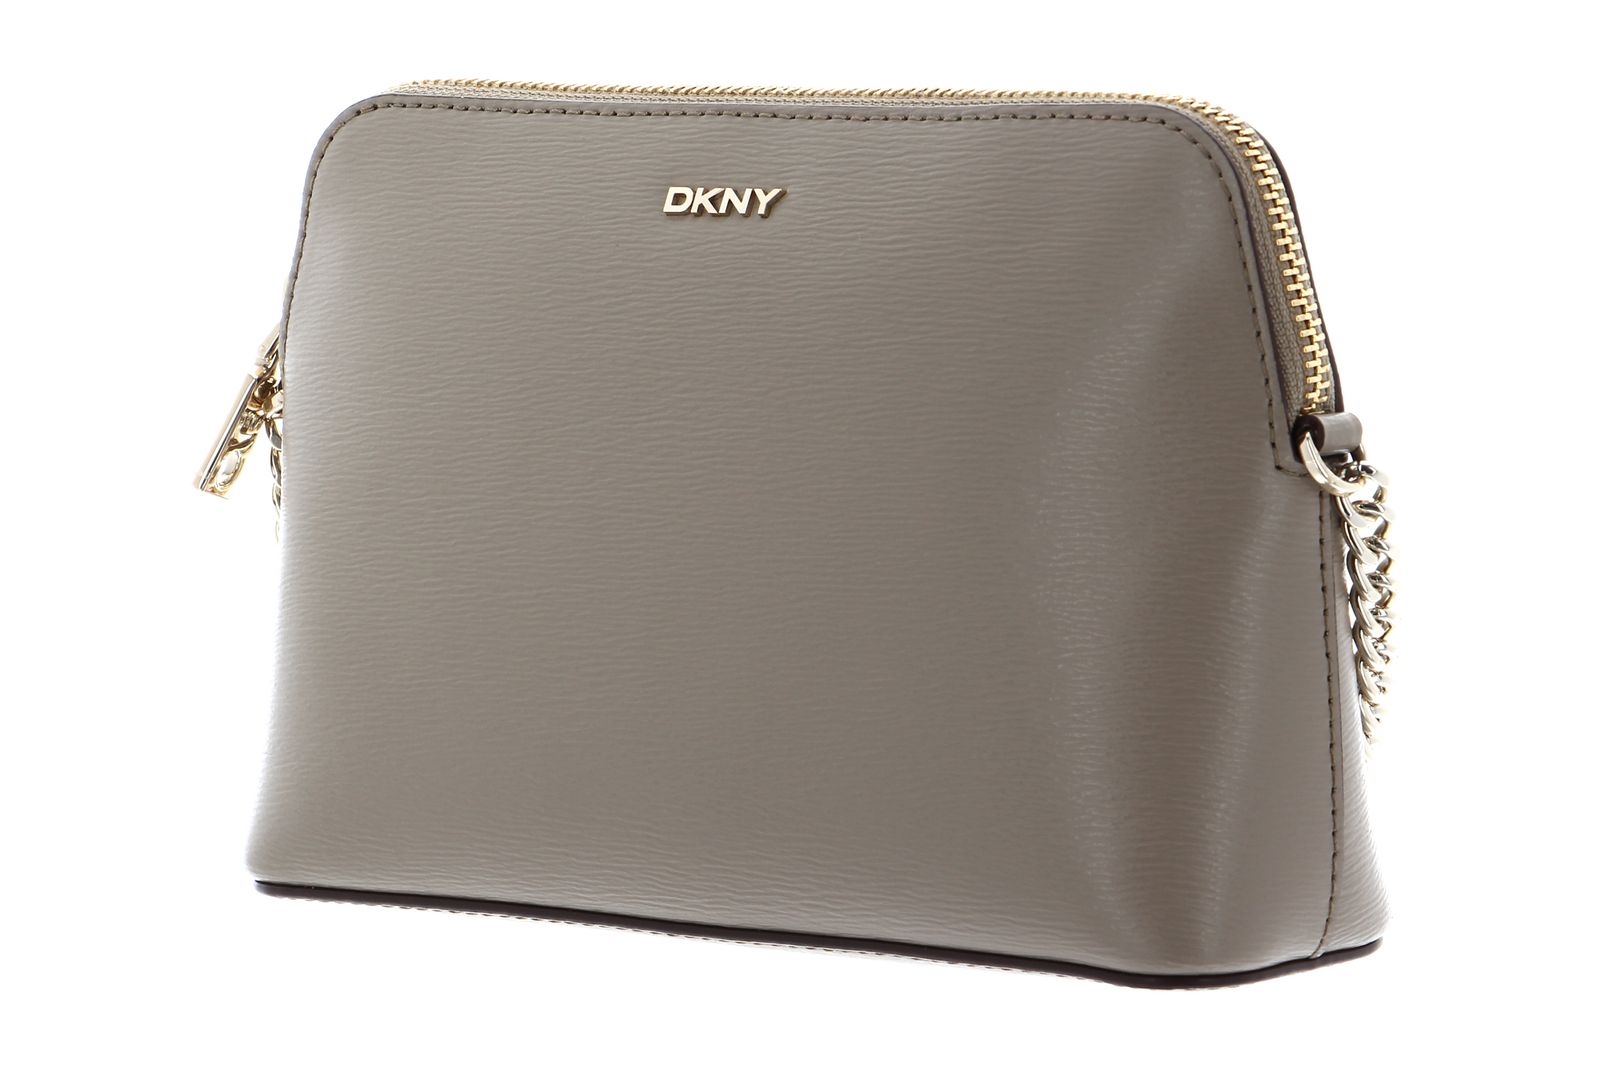 DKNY Women's Bryant Dome Cross Body Bag - Toffee